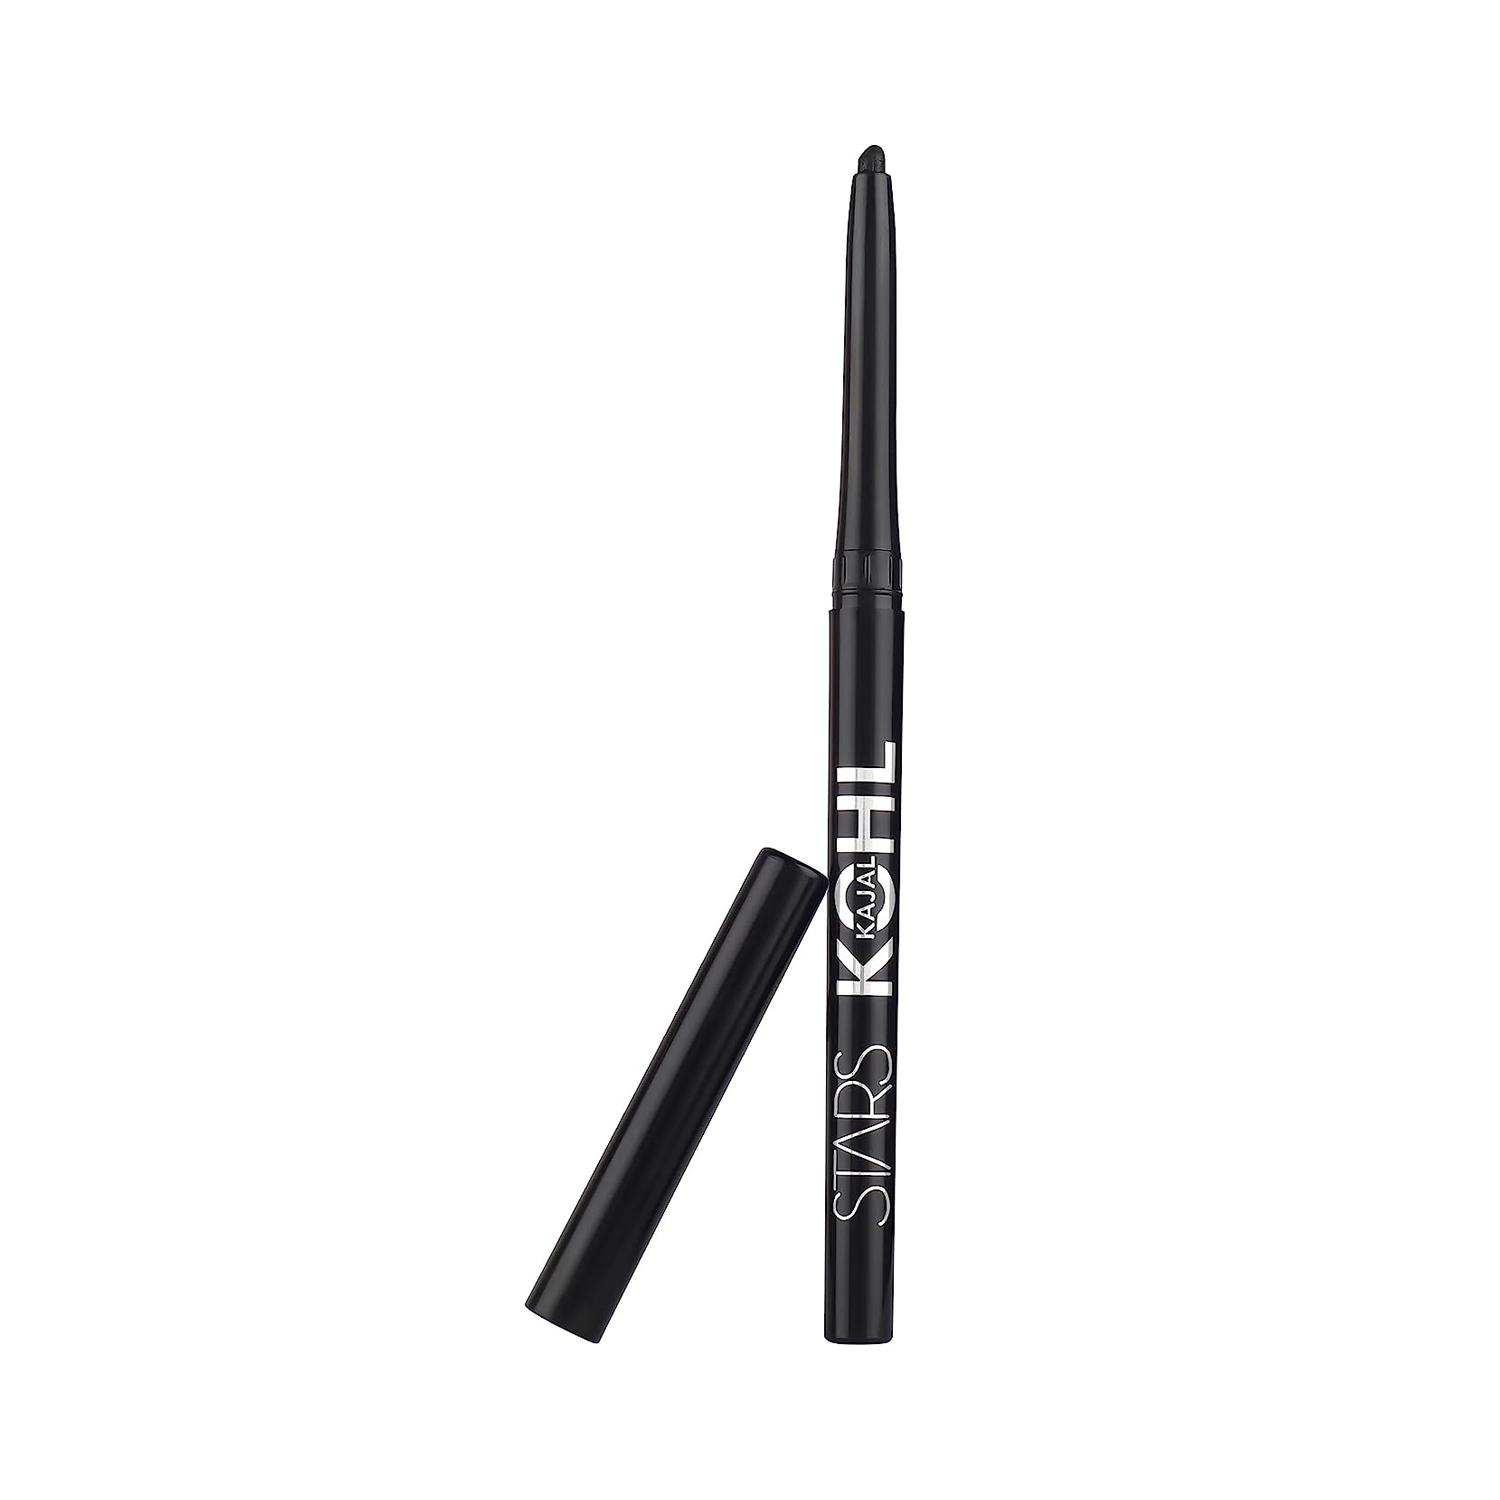 stars cosmetics kohl eye makeup kajal pencil - black (2.25g)